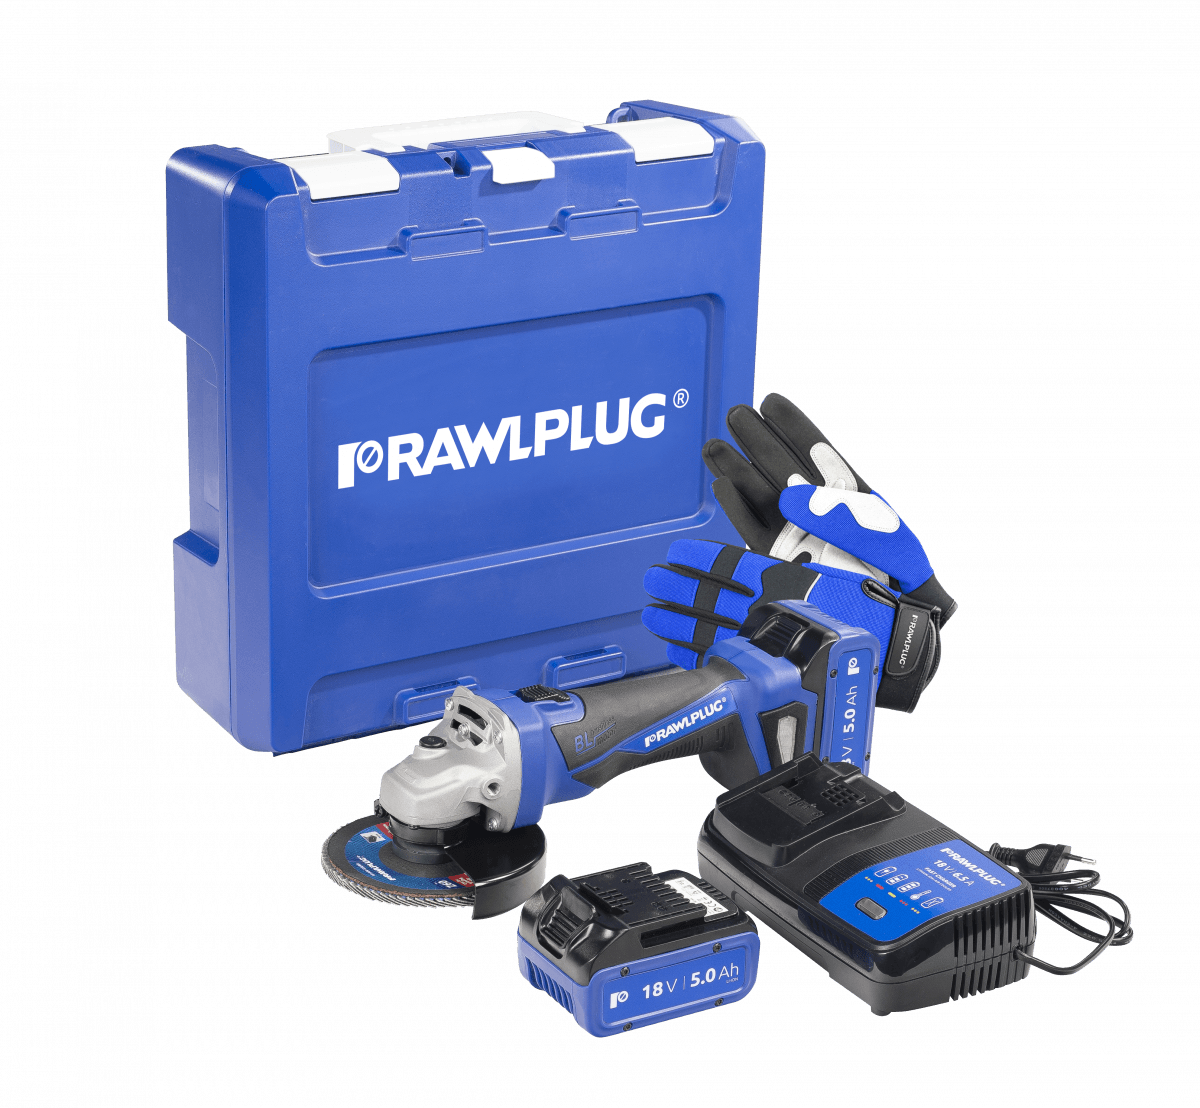 Rawlplug R-PAG18-XL2 Cordless RawlGrinder Angle Grinder 18V 125mm, set